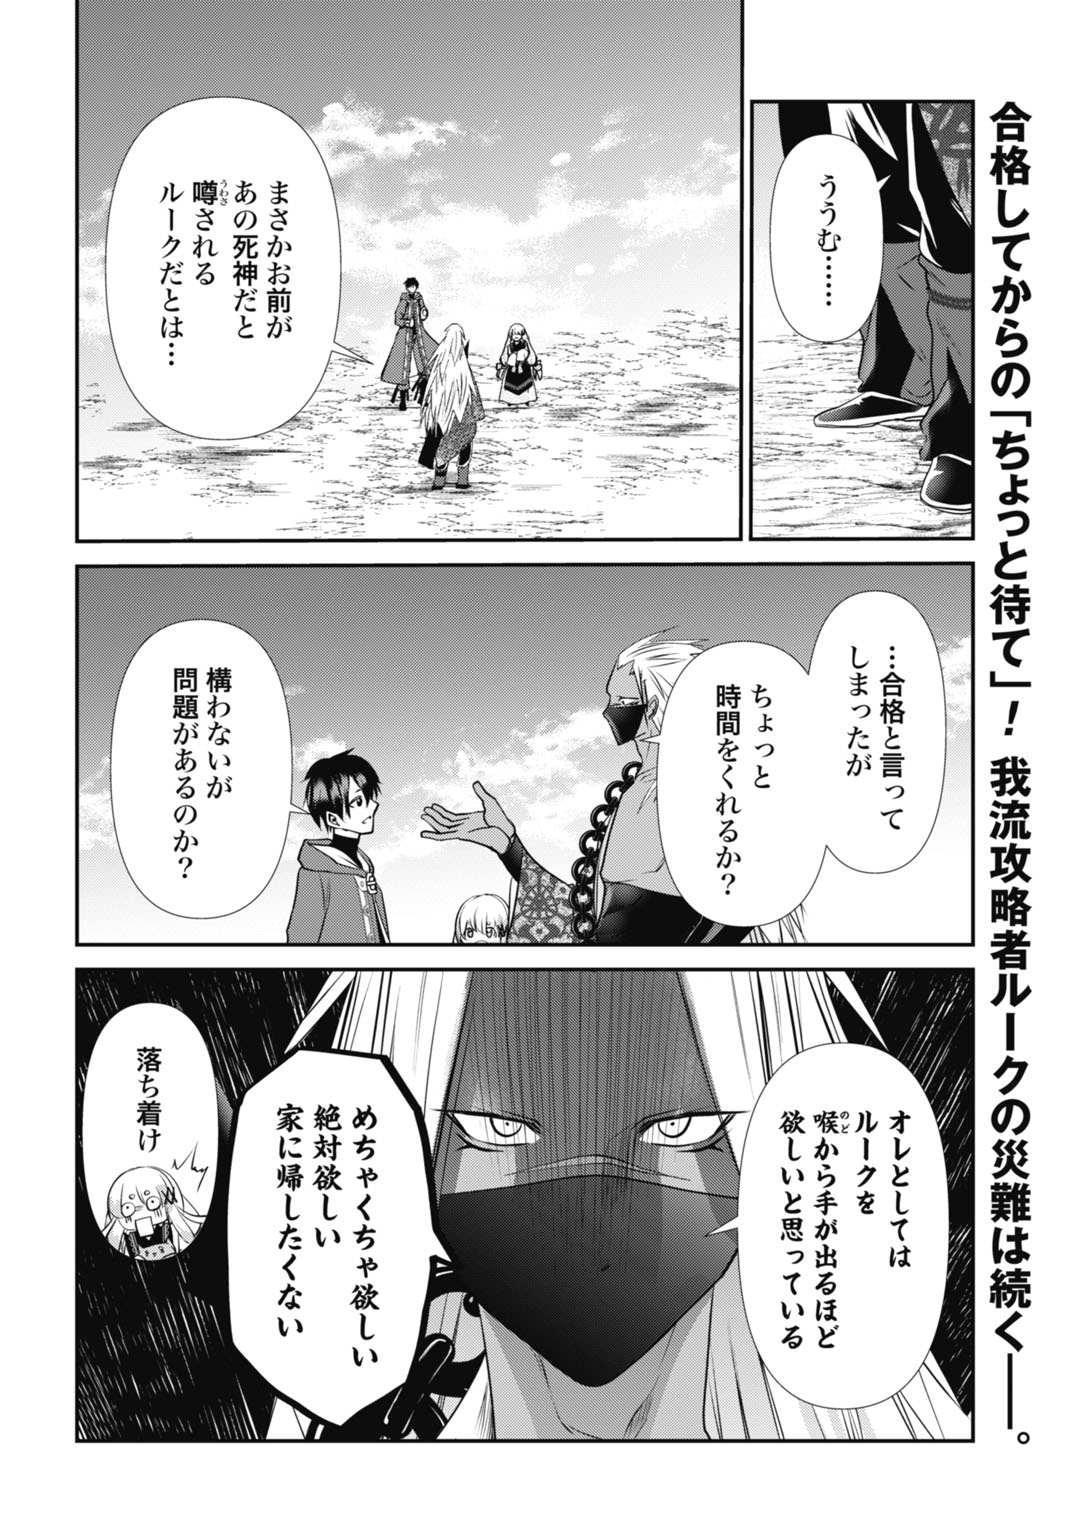 Joushiki Shirazu no Saikyou Madoushi - Chapter 10 - Page 2